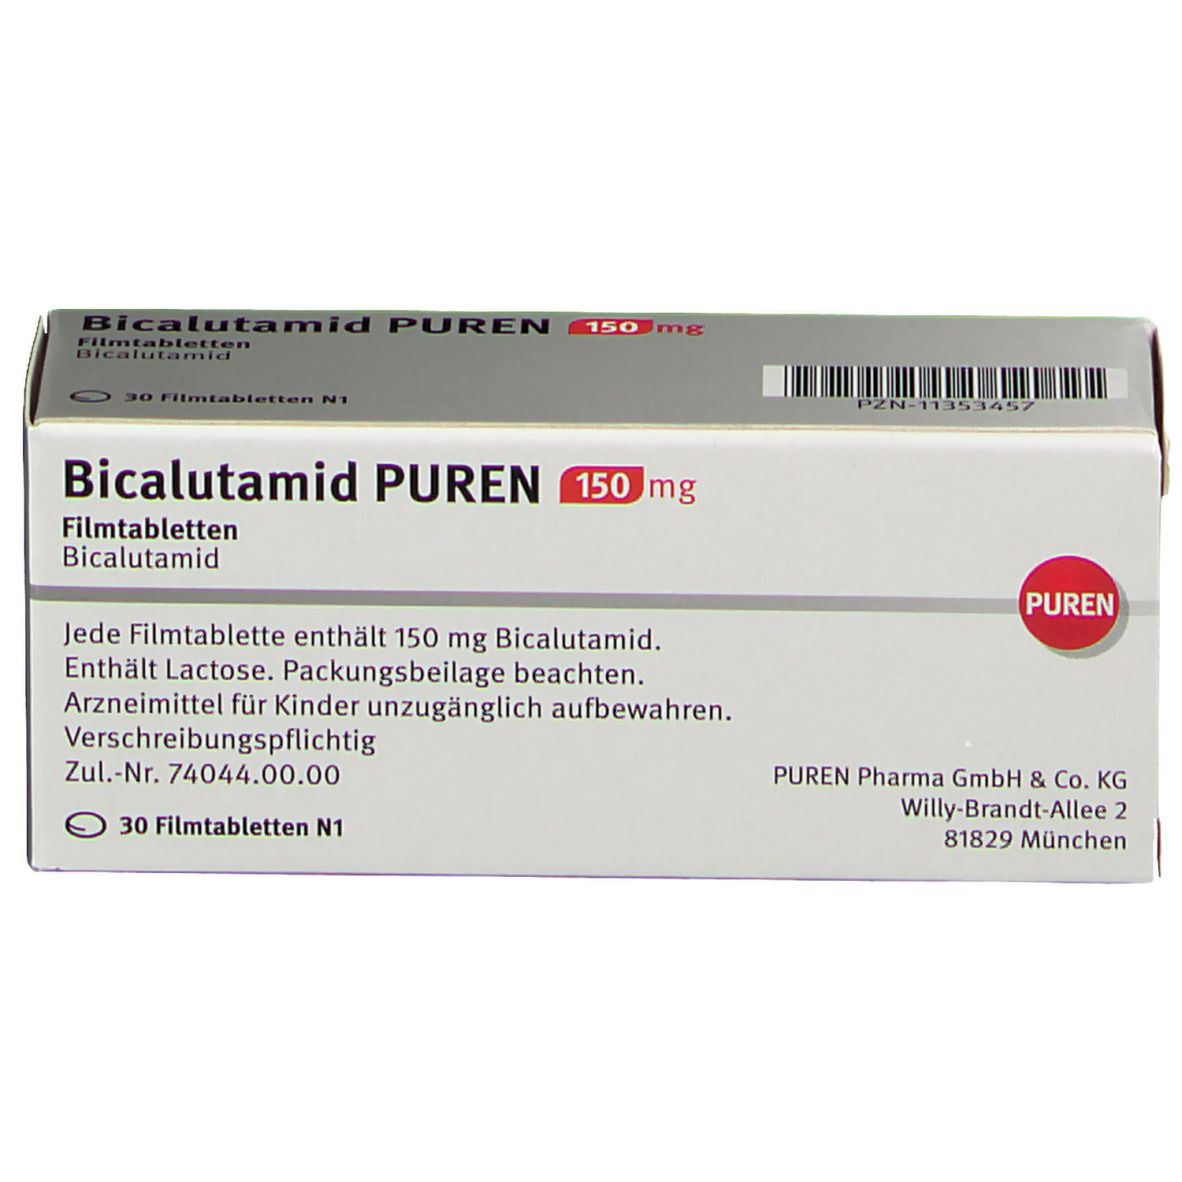 Bicalutamid PUREN 150 mg